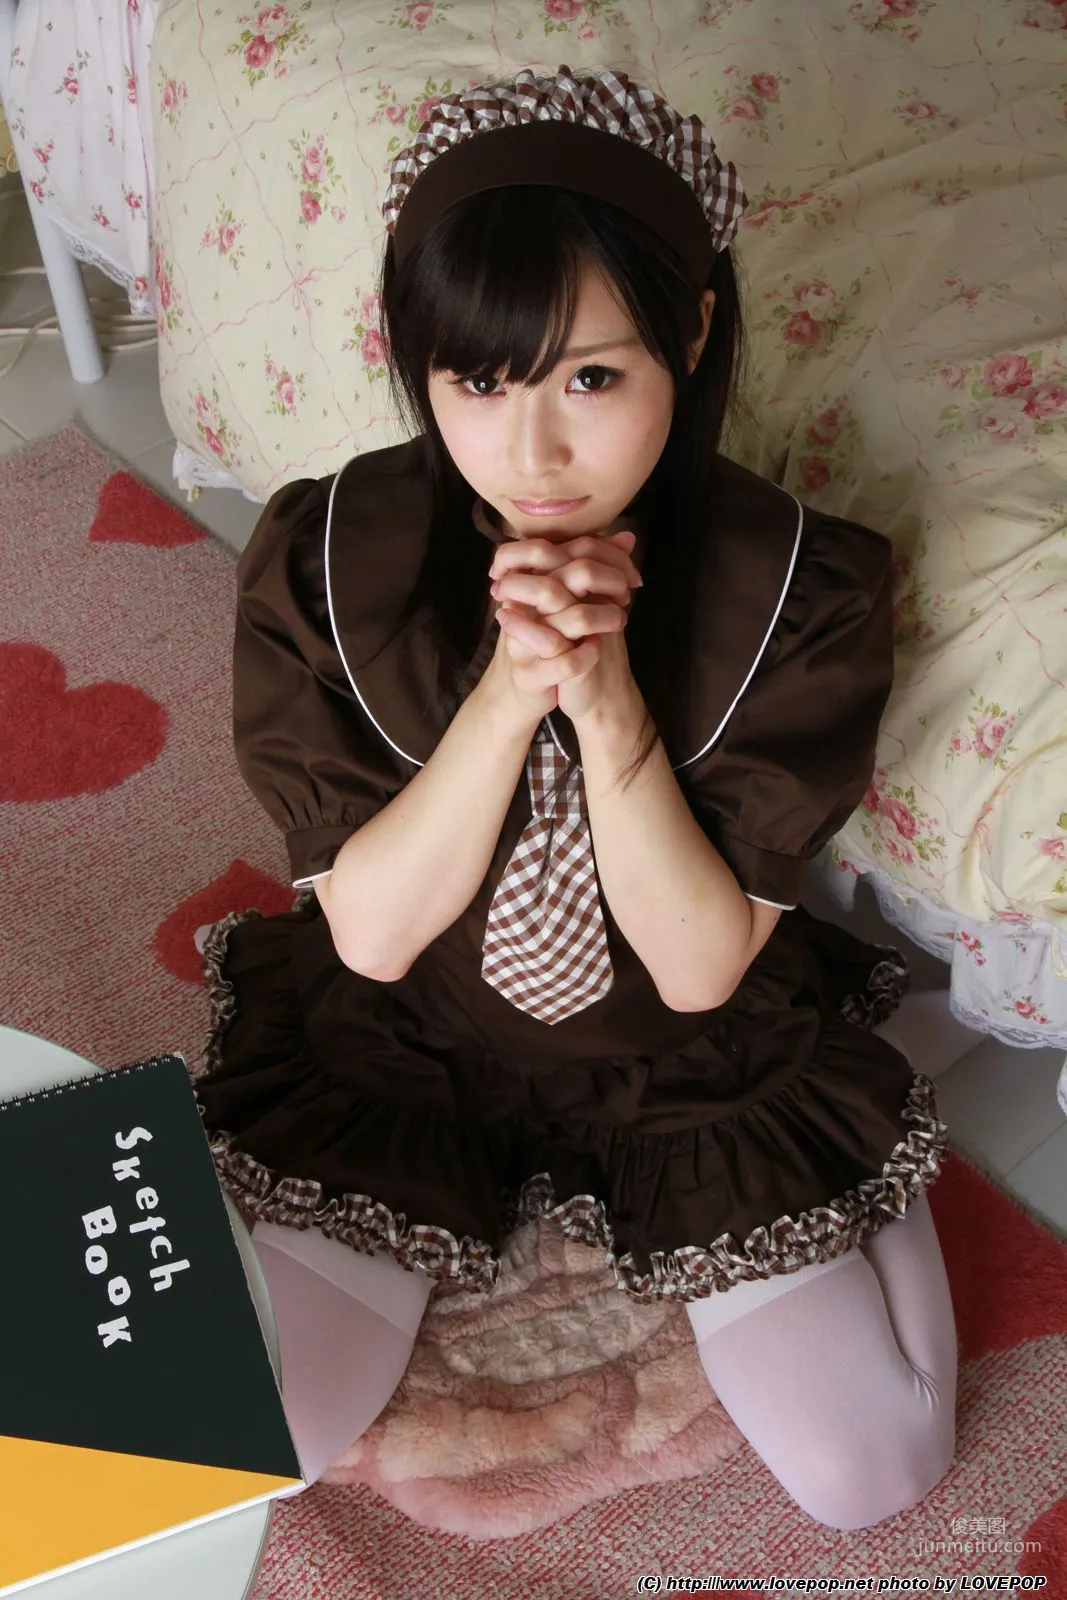 [LOVEPOP] Megumi Aisaka 逢坂愛 Photoset 01 写真集(37) -美女写真美女图片大全-高清美女图库